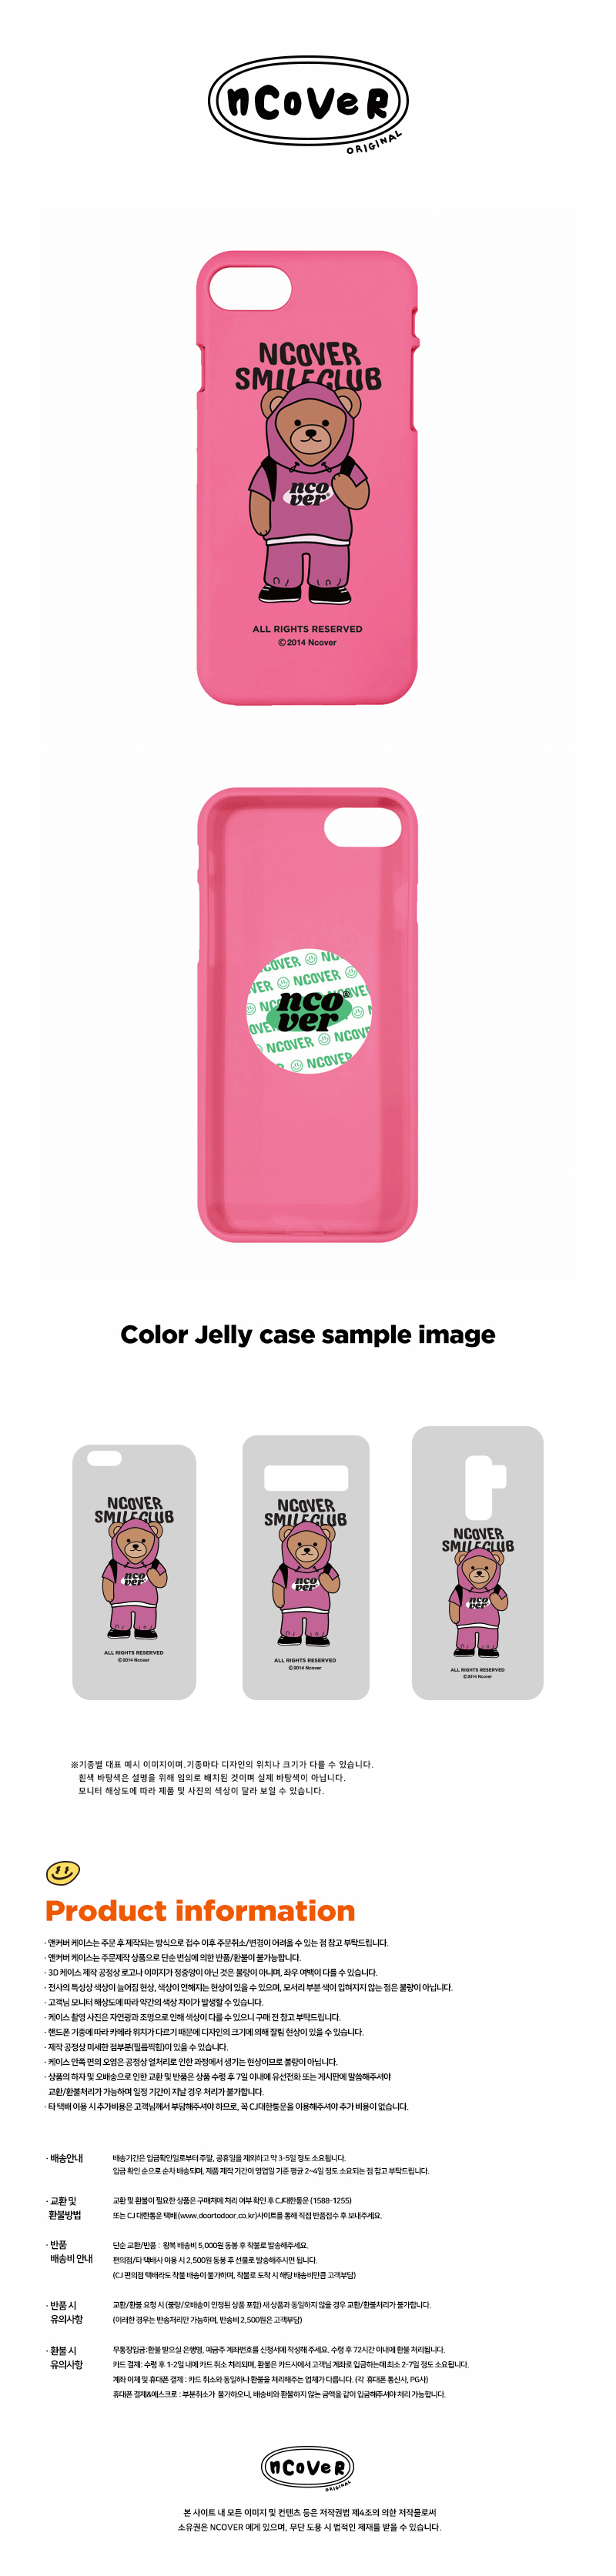  Hoodie bruin-pink(color jelly)  19,000원 - 바이인터내셔널주식회사 디지털, 모바일 액세서리, 휴대폰 케이스, 기타 스마트폰 바보사랑  Hoodie bruin-pink(color jelly)  19,000원 - 바이인터내셔널주식회사 디지털, 모바일 액세서리, 휴대폰 케이스, 기타 스마트폰 바보사랑